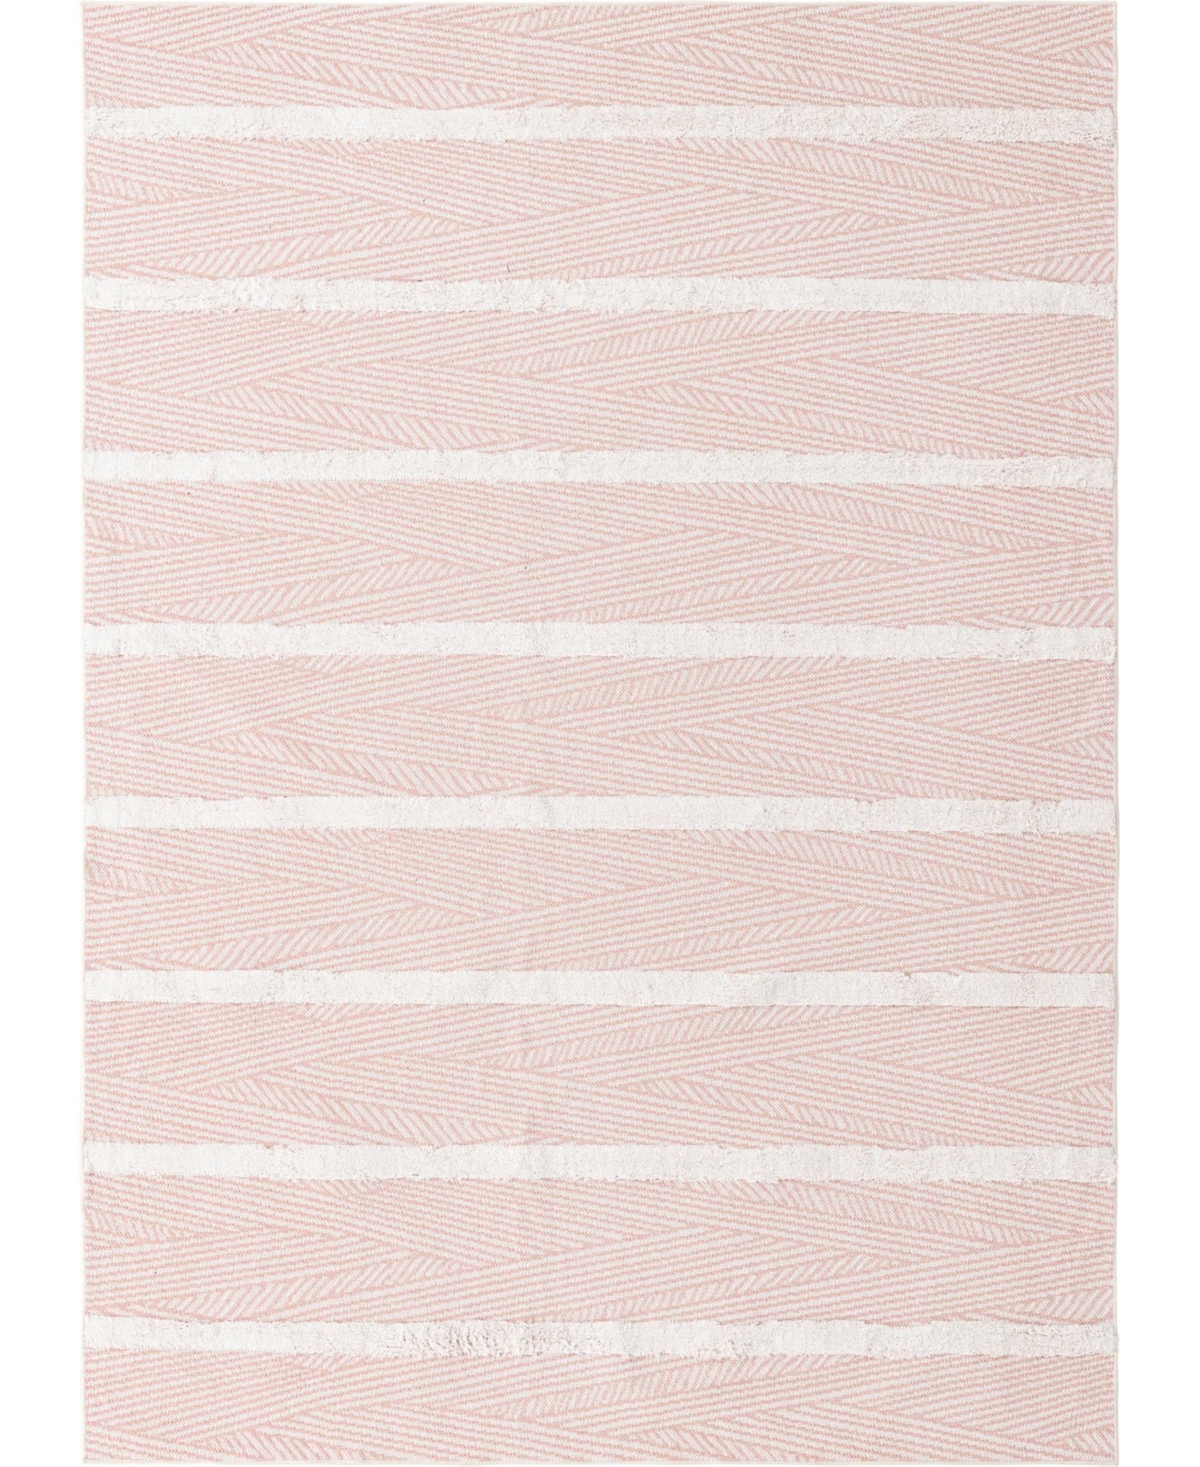 Sabrina Soto Casa Madrid 6'4in x 9' Area Rug - Pink